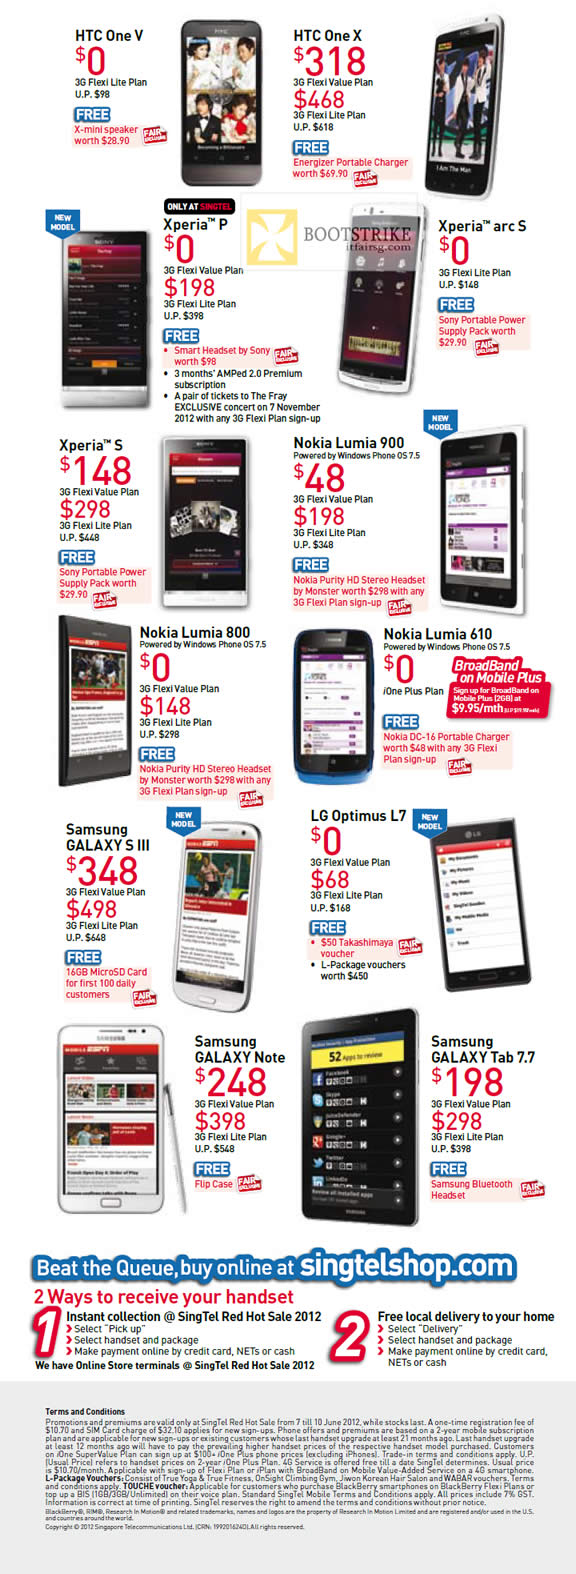 PC SHOW 2012 price list image brochure of Singtel Mobile HTC One V, X, Sony Xperia P, Arc S, S, Nokia Lumia 900, 800, 610, Samsung Galaxy S III, Note, Tab 7.7, LG Optimus L7